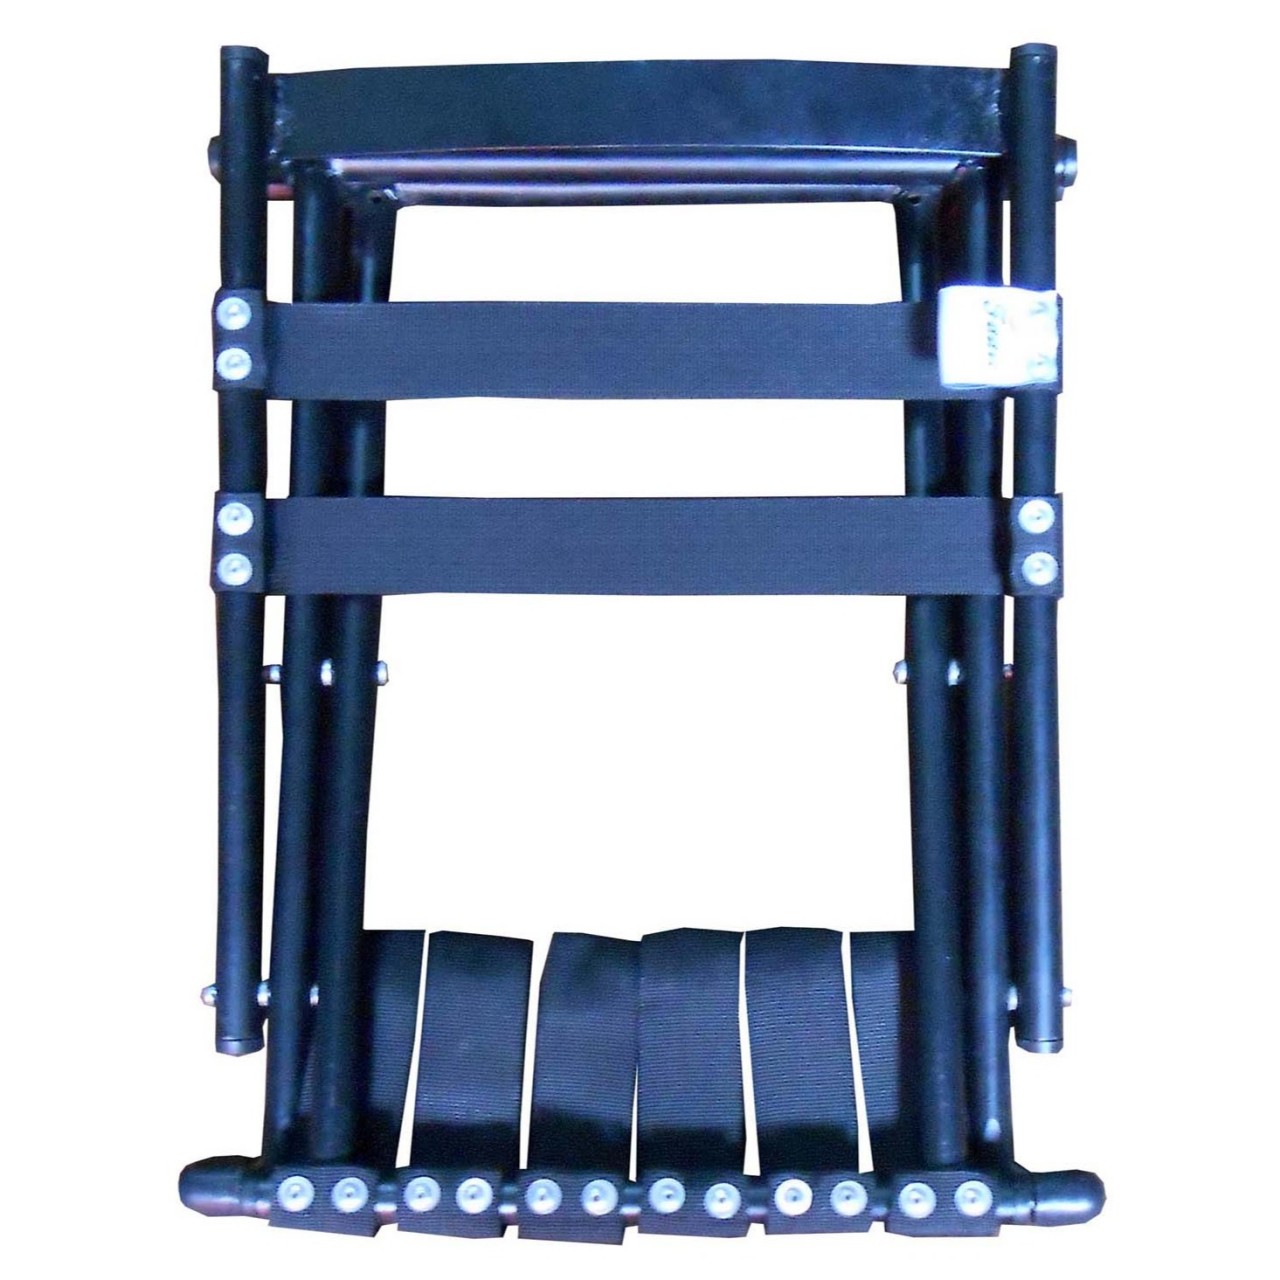 Folding Chair Mini - Black